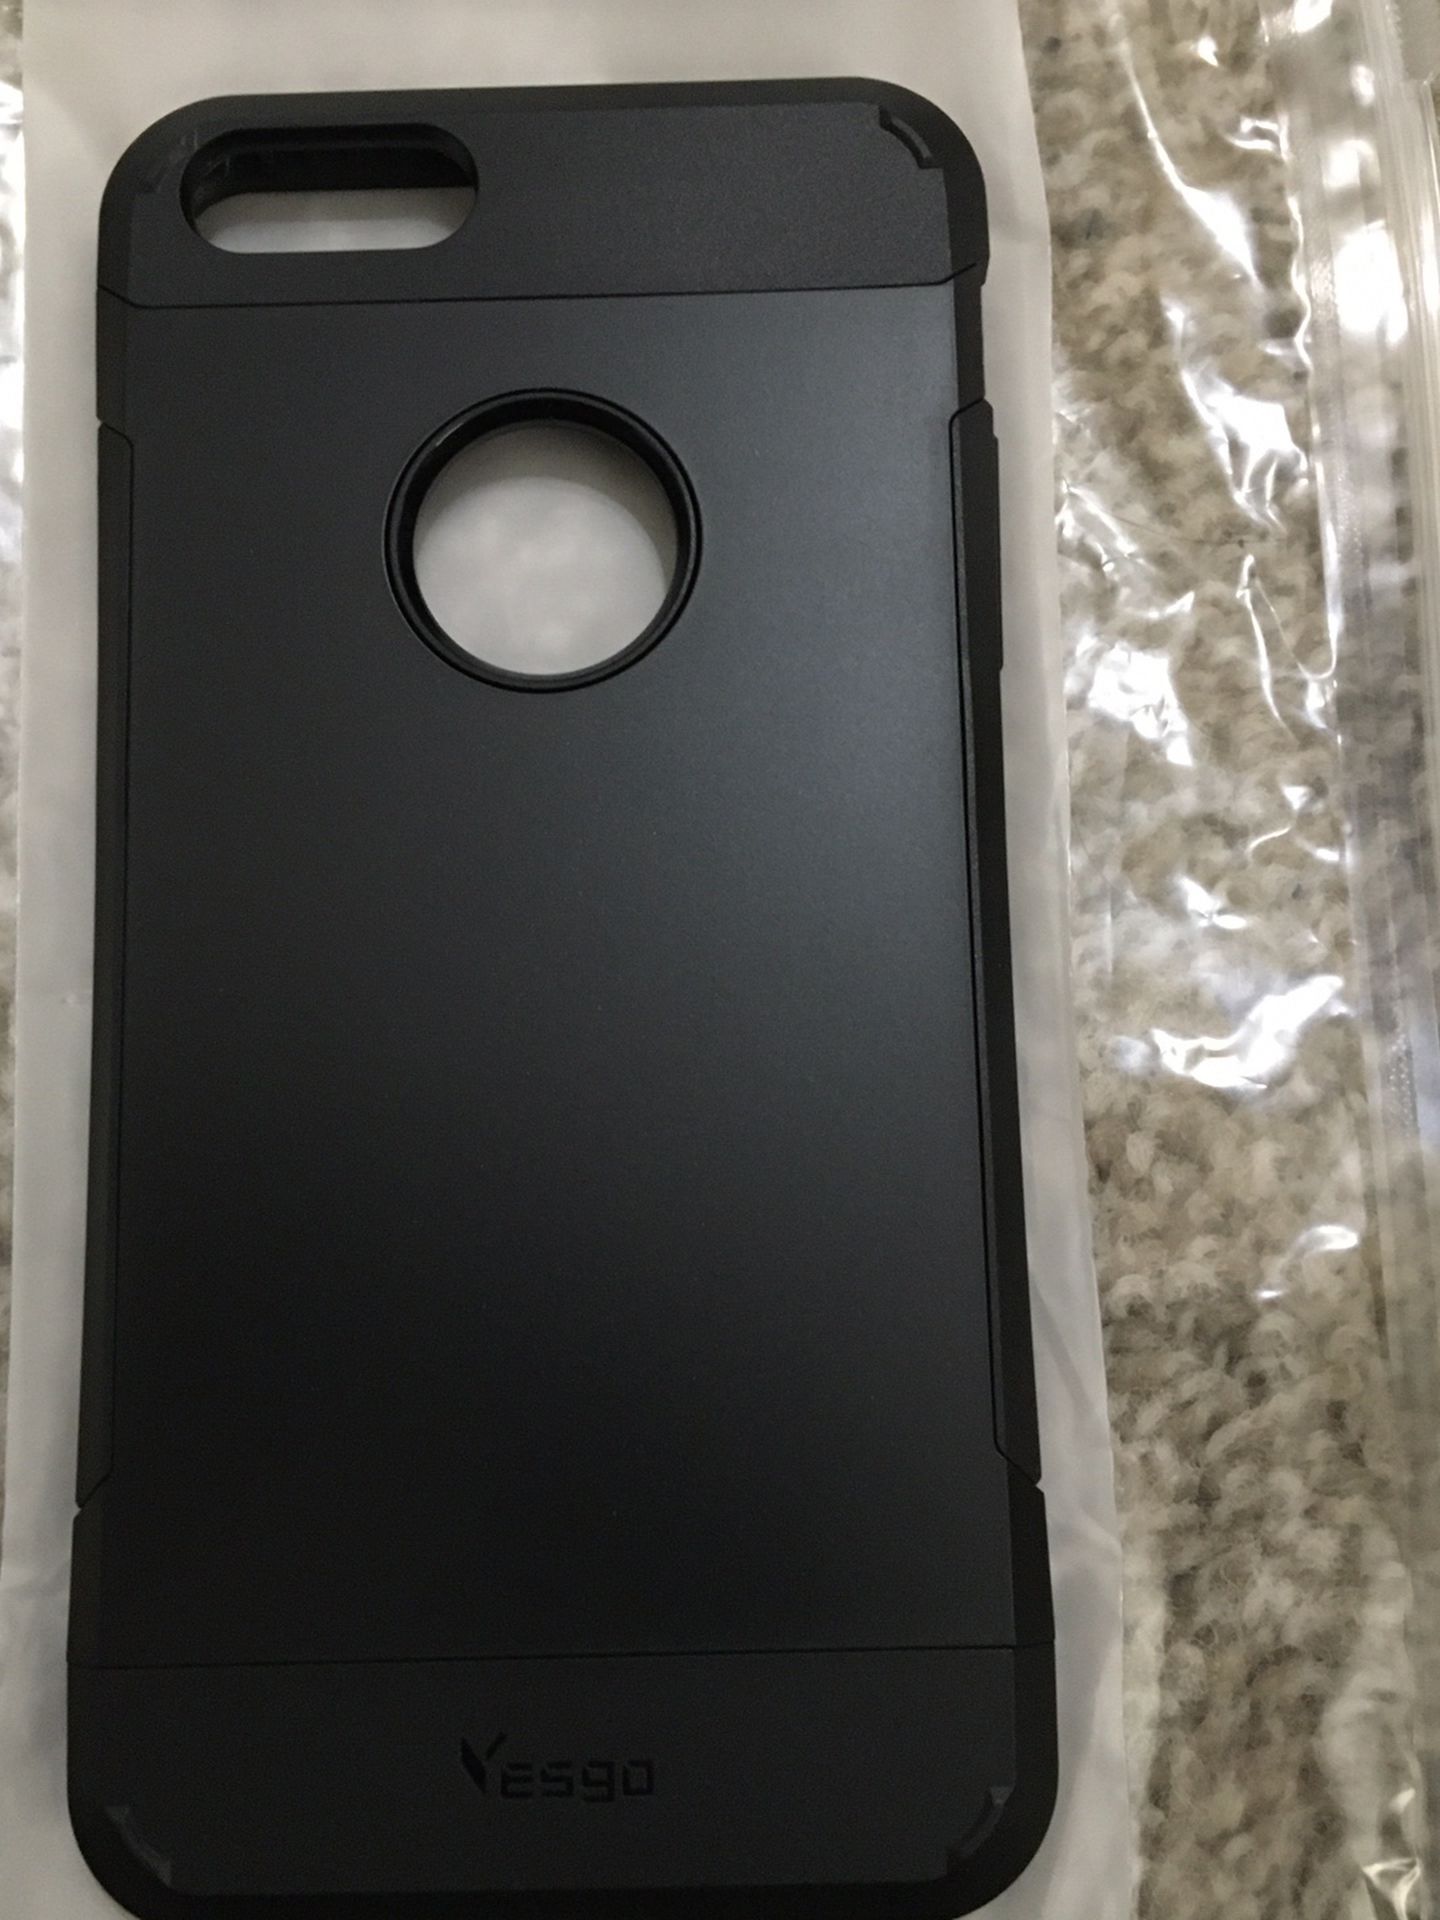 Yesgo iPhone 6s Plus Case Slim Anti-Scratch Shockproof Drop Protection Case